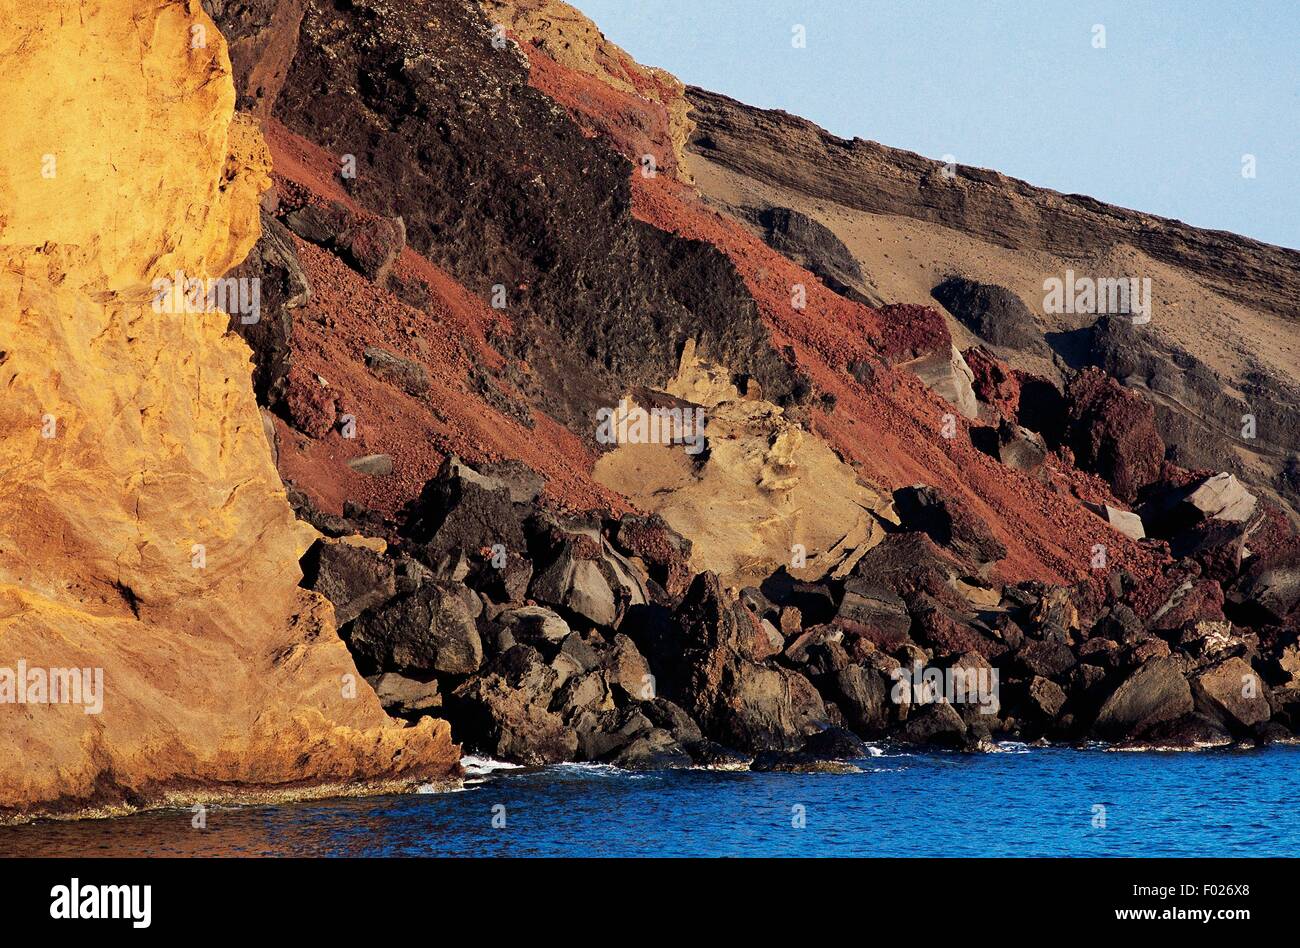 Lavafelsen, Monte Nero (Black Mountain), Cala Pozzolan, Linosa, pelagischen Inseln, Sizilien, Italien. Stockfoto